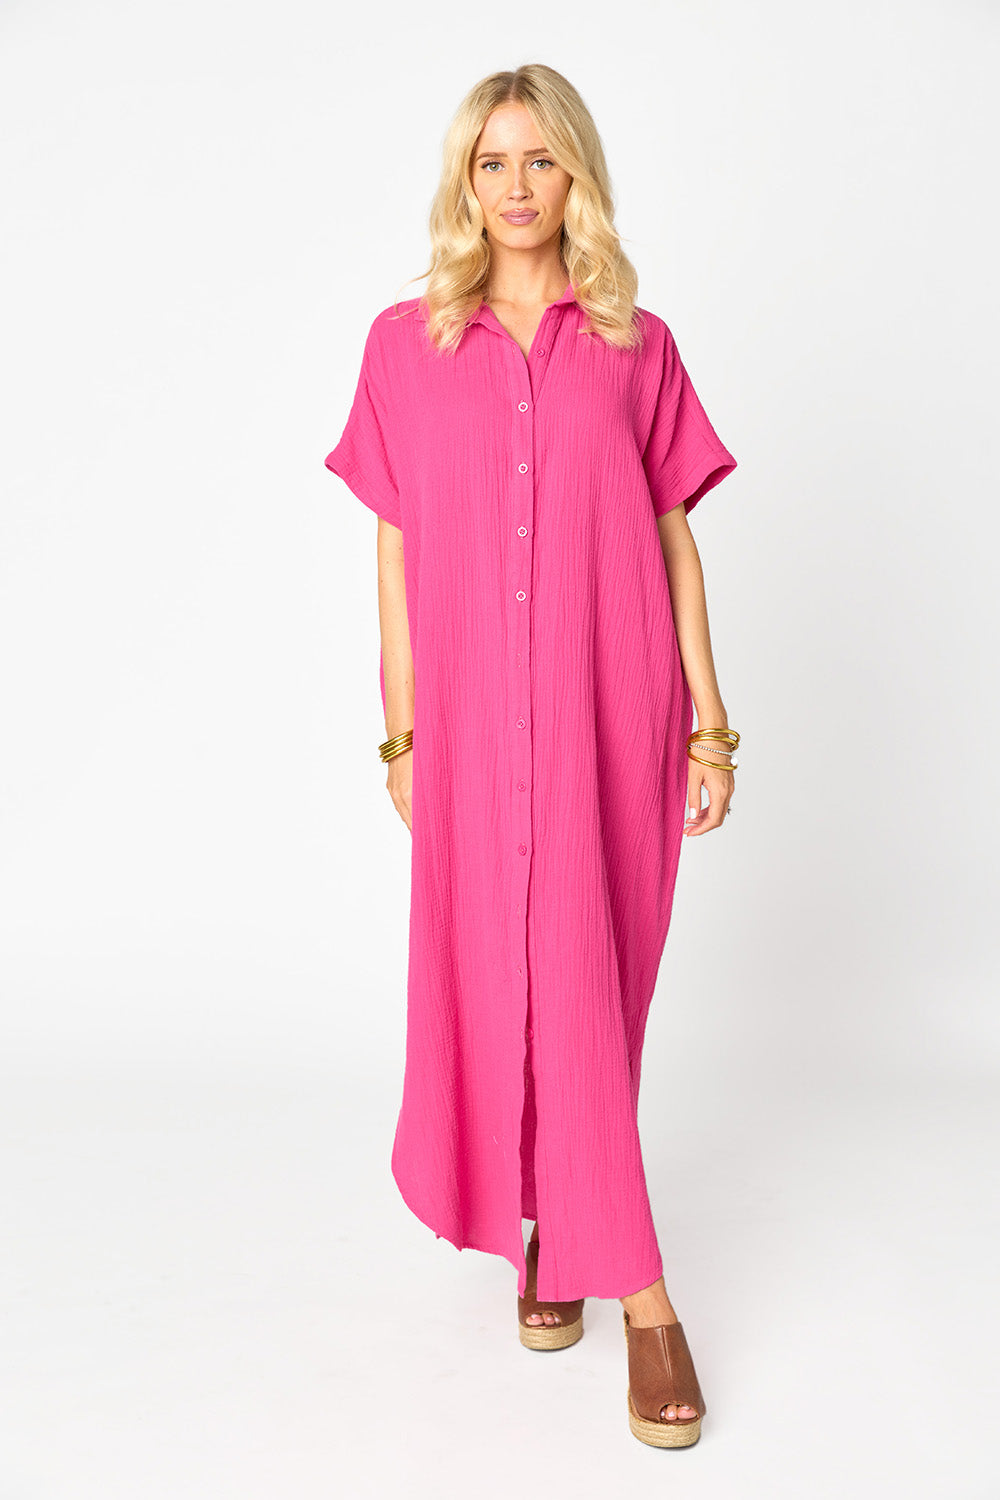 BuddyLove Carmen Cover Up Caftan Maxi Dress - Hot Pink